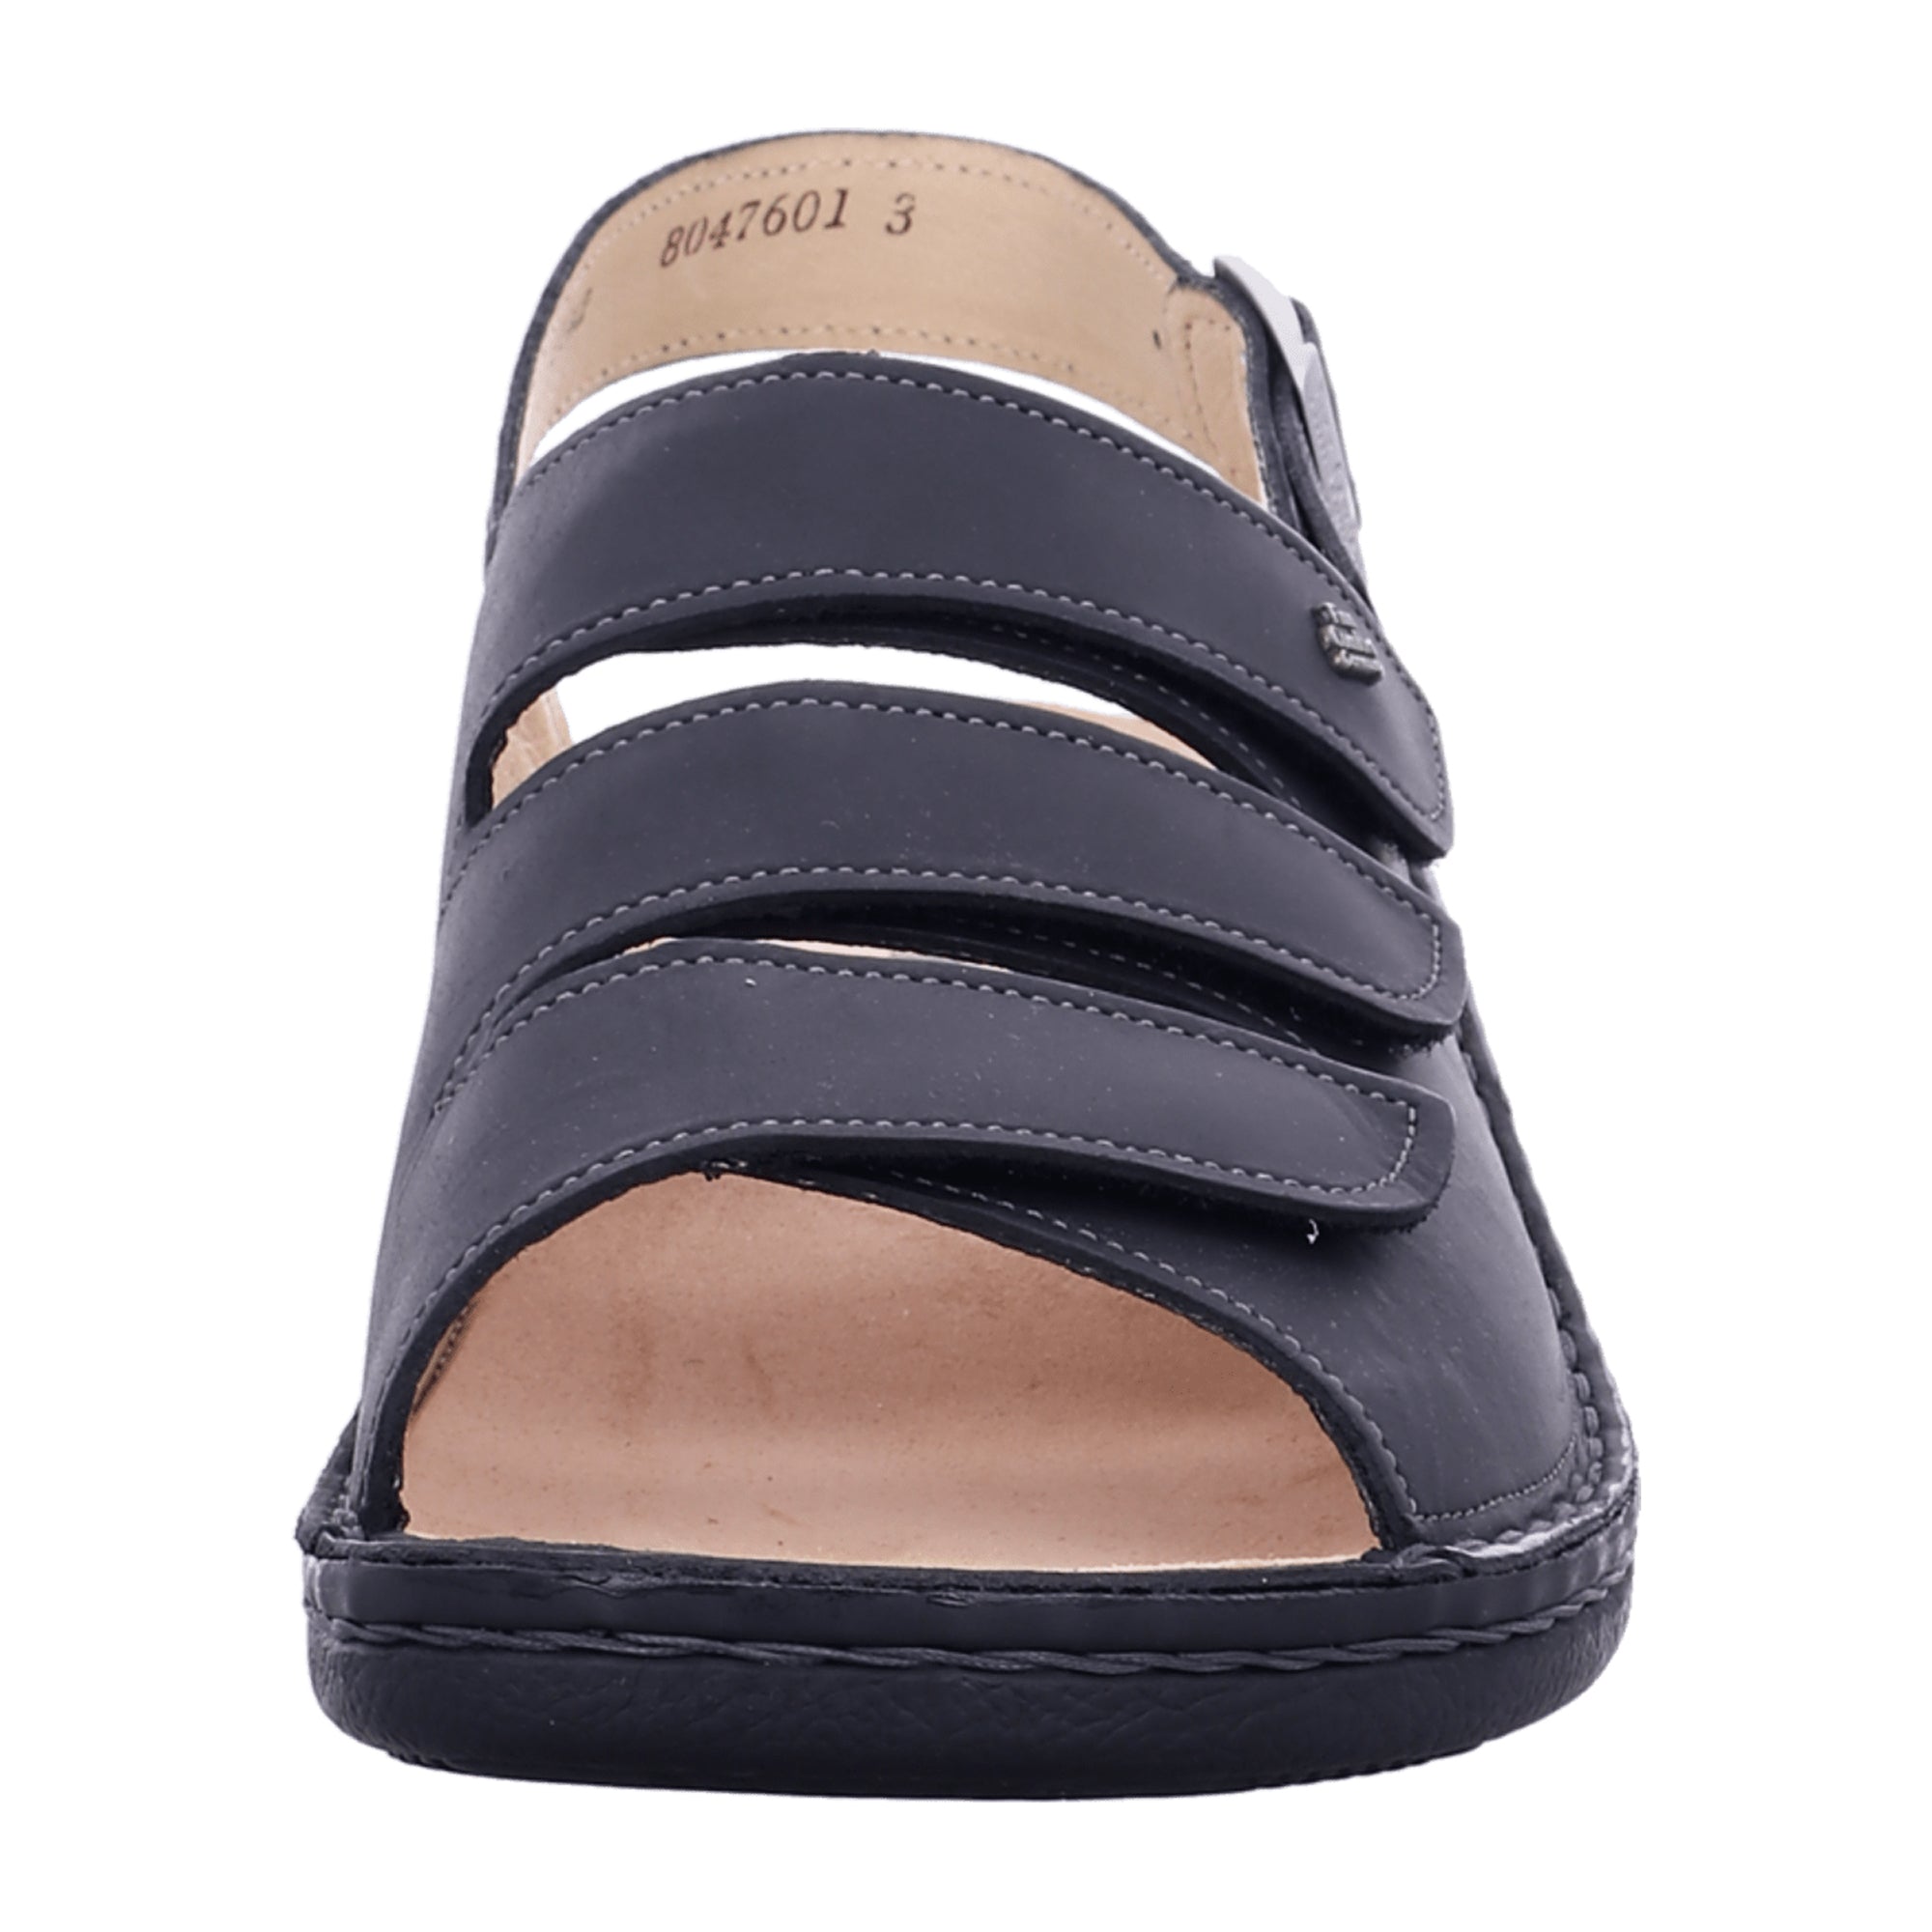 Finn Comfort Sylt Men's Sandals - Comfortable Leather Sandals in Black with Adjustable Straps